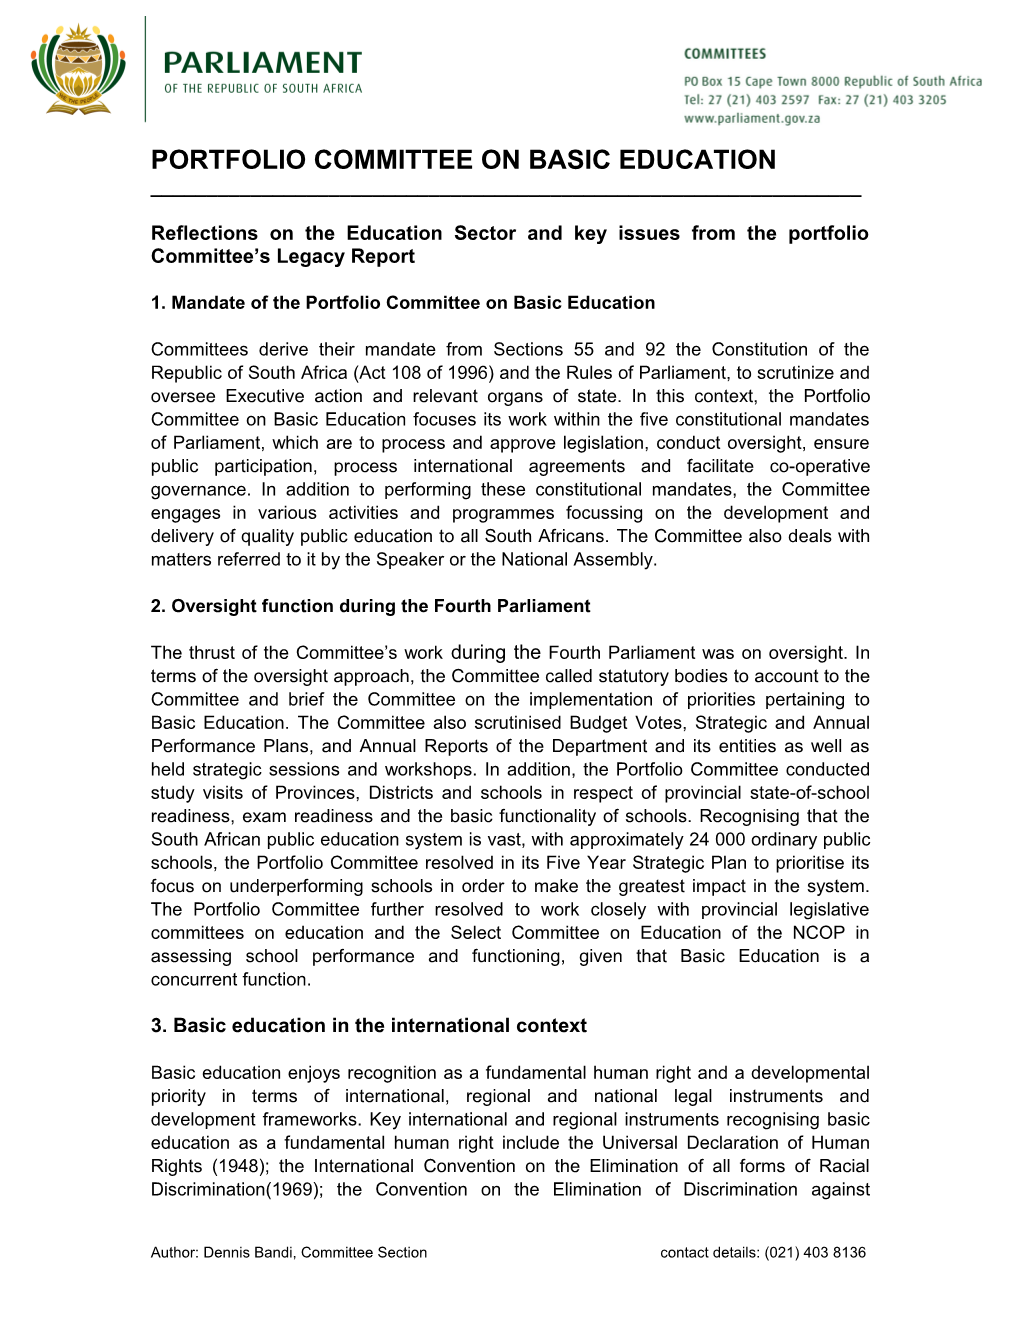 1. Mandate of the Portfolio Committee on Basic Education